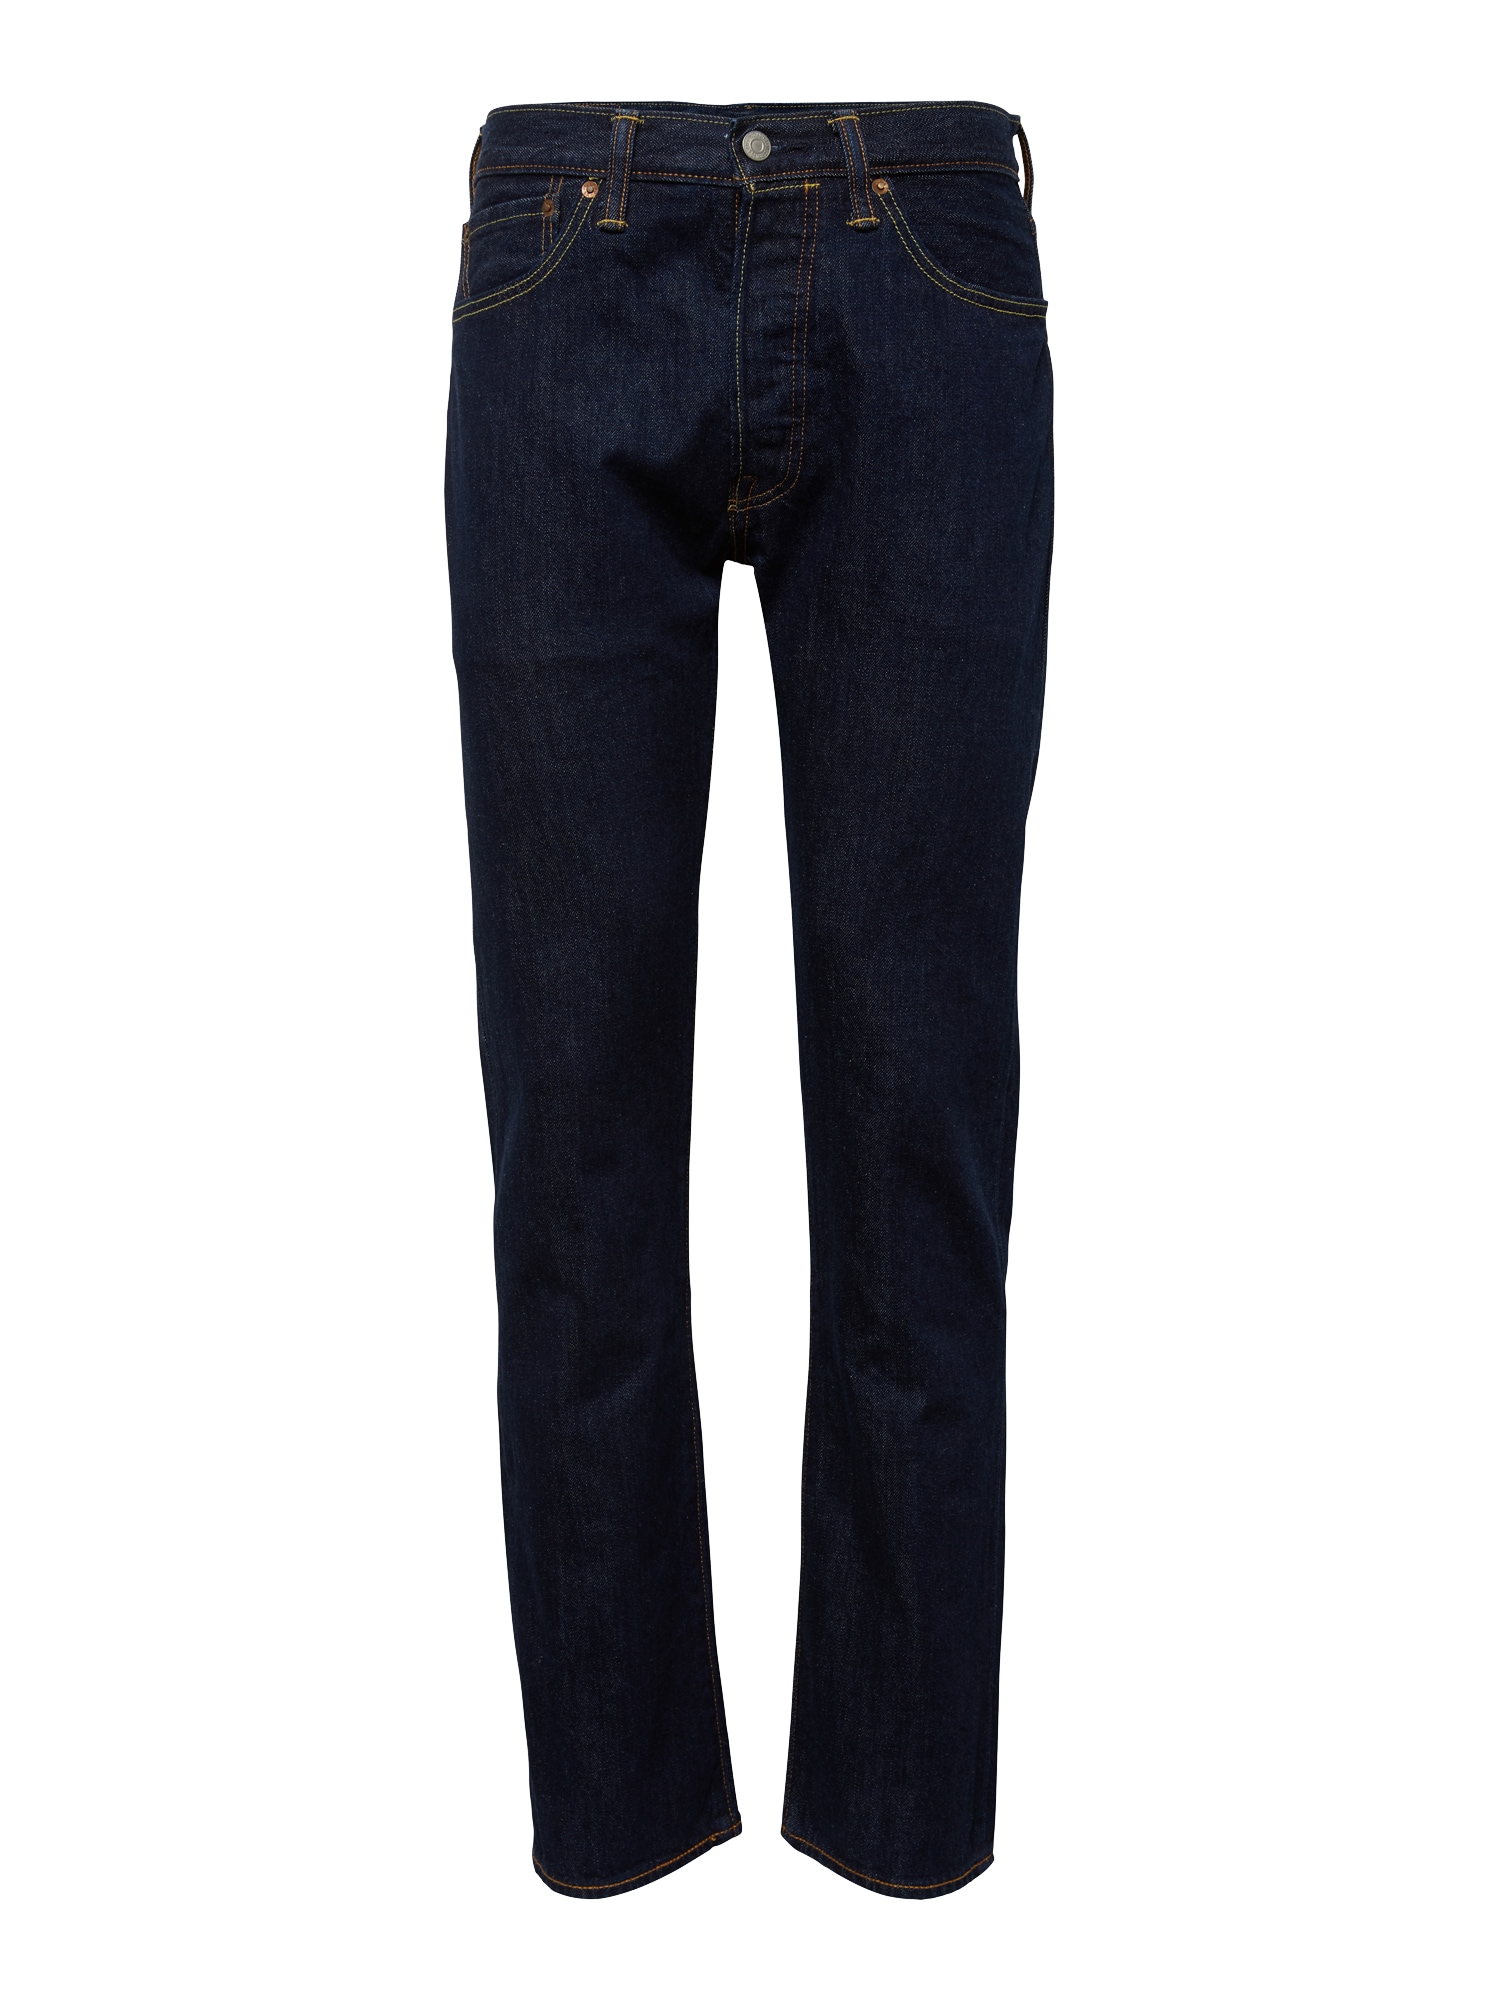 Jeans '501 ORIGINAL FIT' von Levis